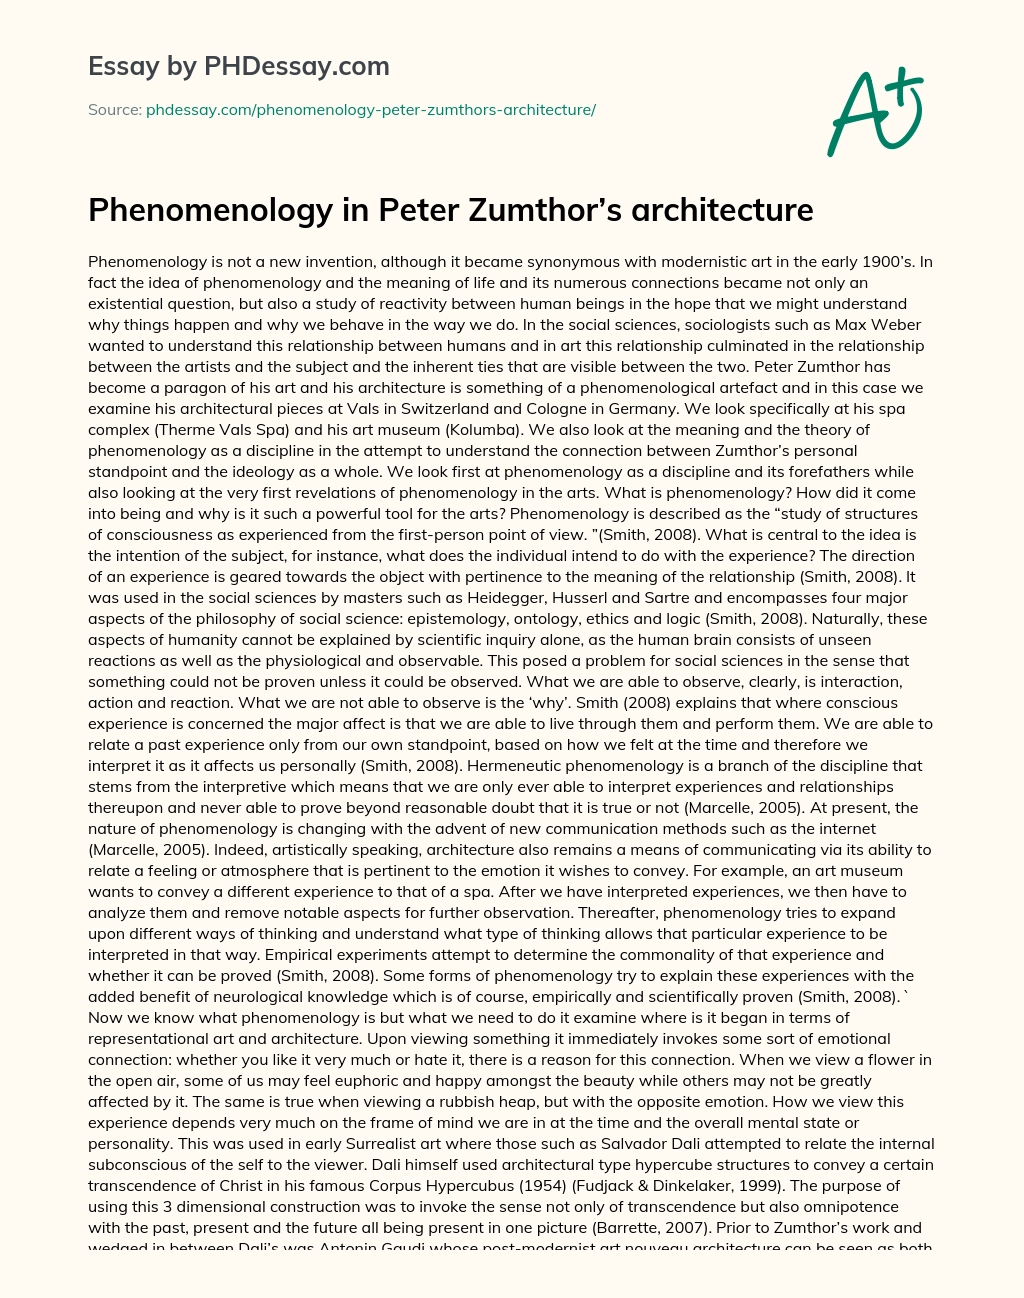 Phenomenology in Peter Zumthor’s architecture essay